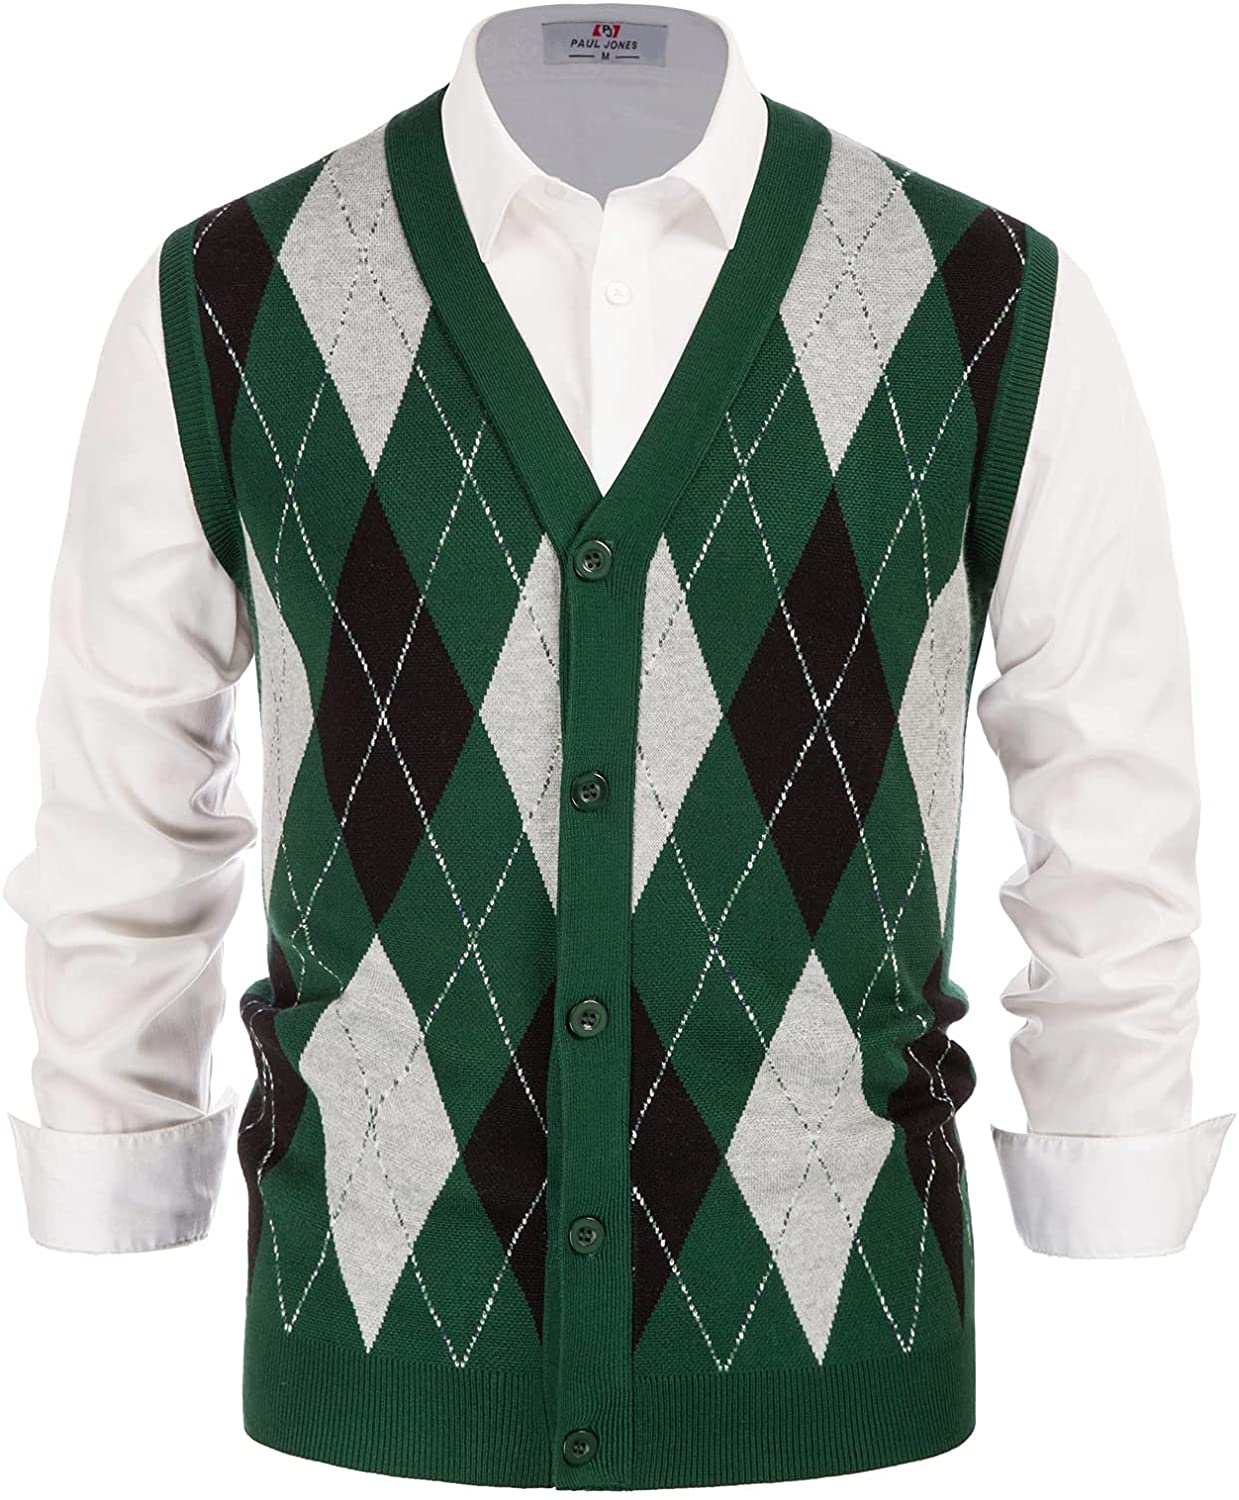 PJ PAUL JONES Mens Sweater Vest Cardigan Button Front Knitwear Contrast Color Argyle Sweater Vest 